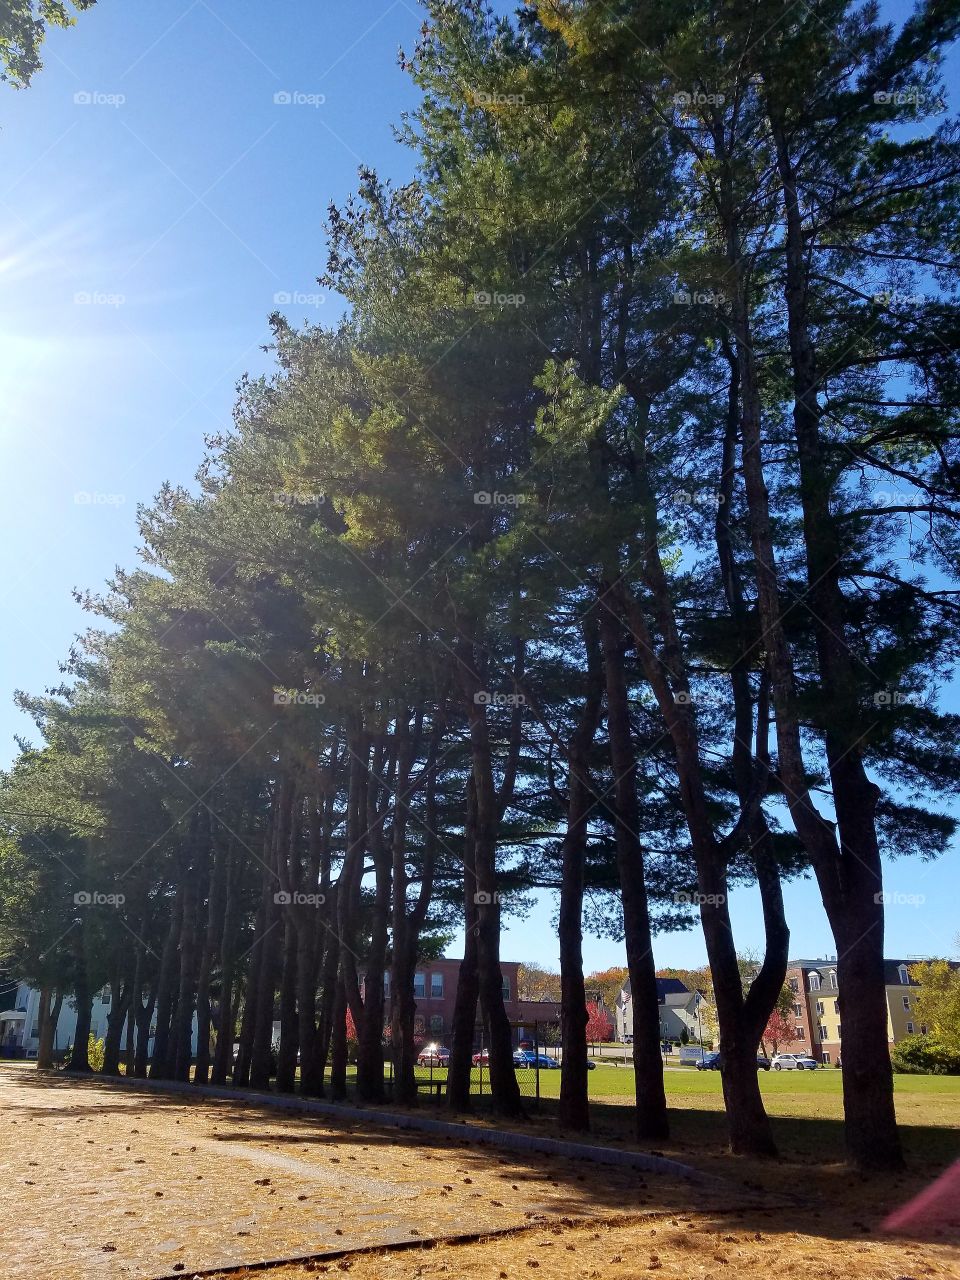 pine trees line up